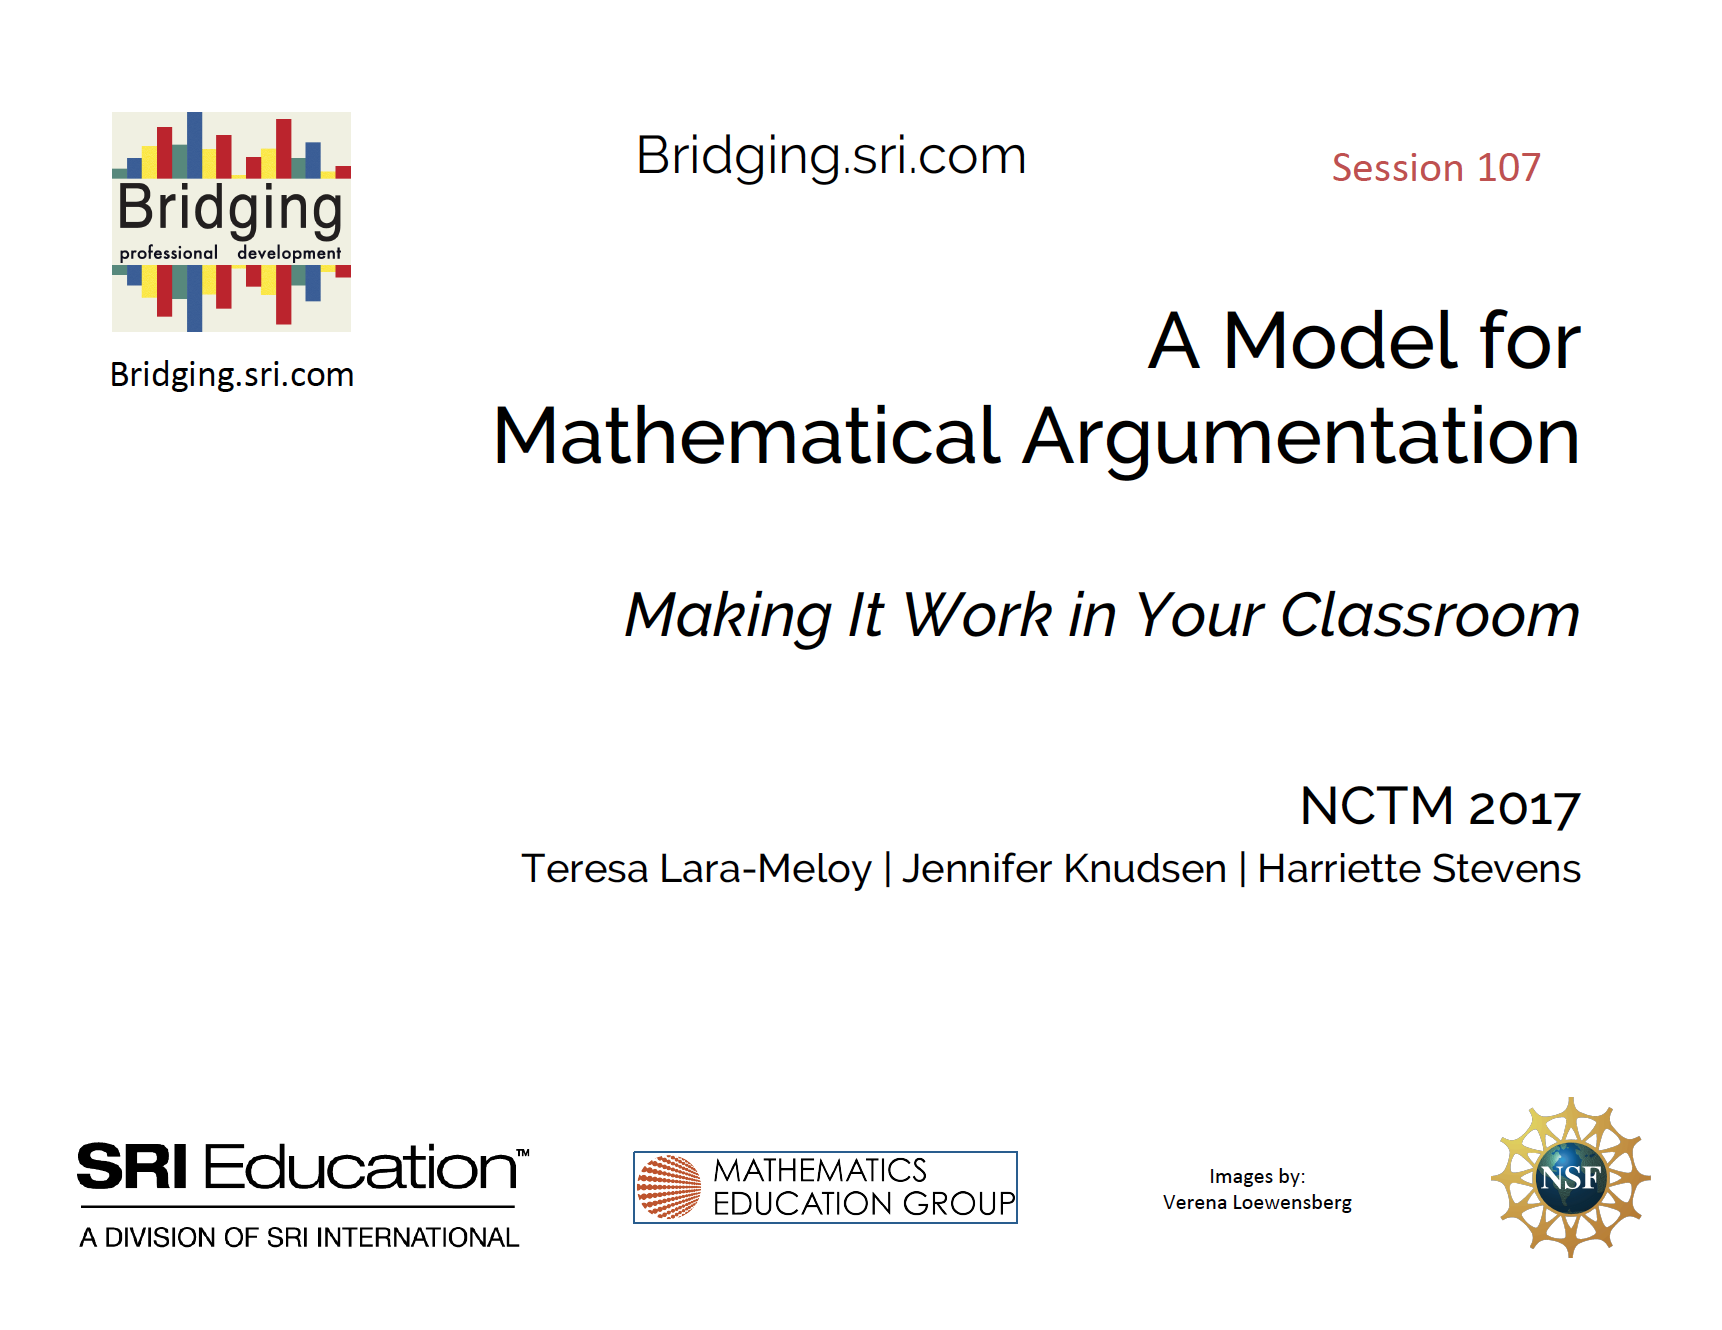 A Model for Mathematical Argumentation presentation cover